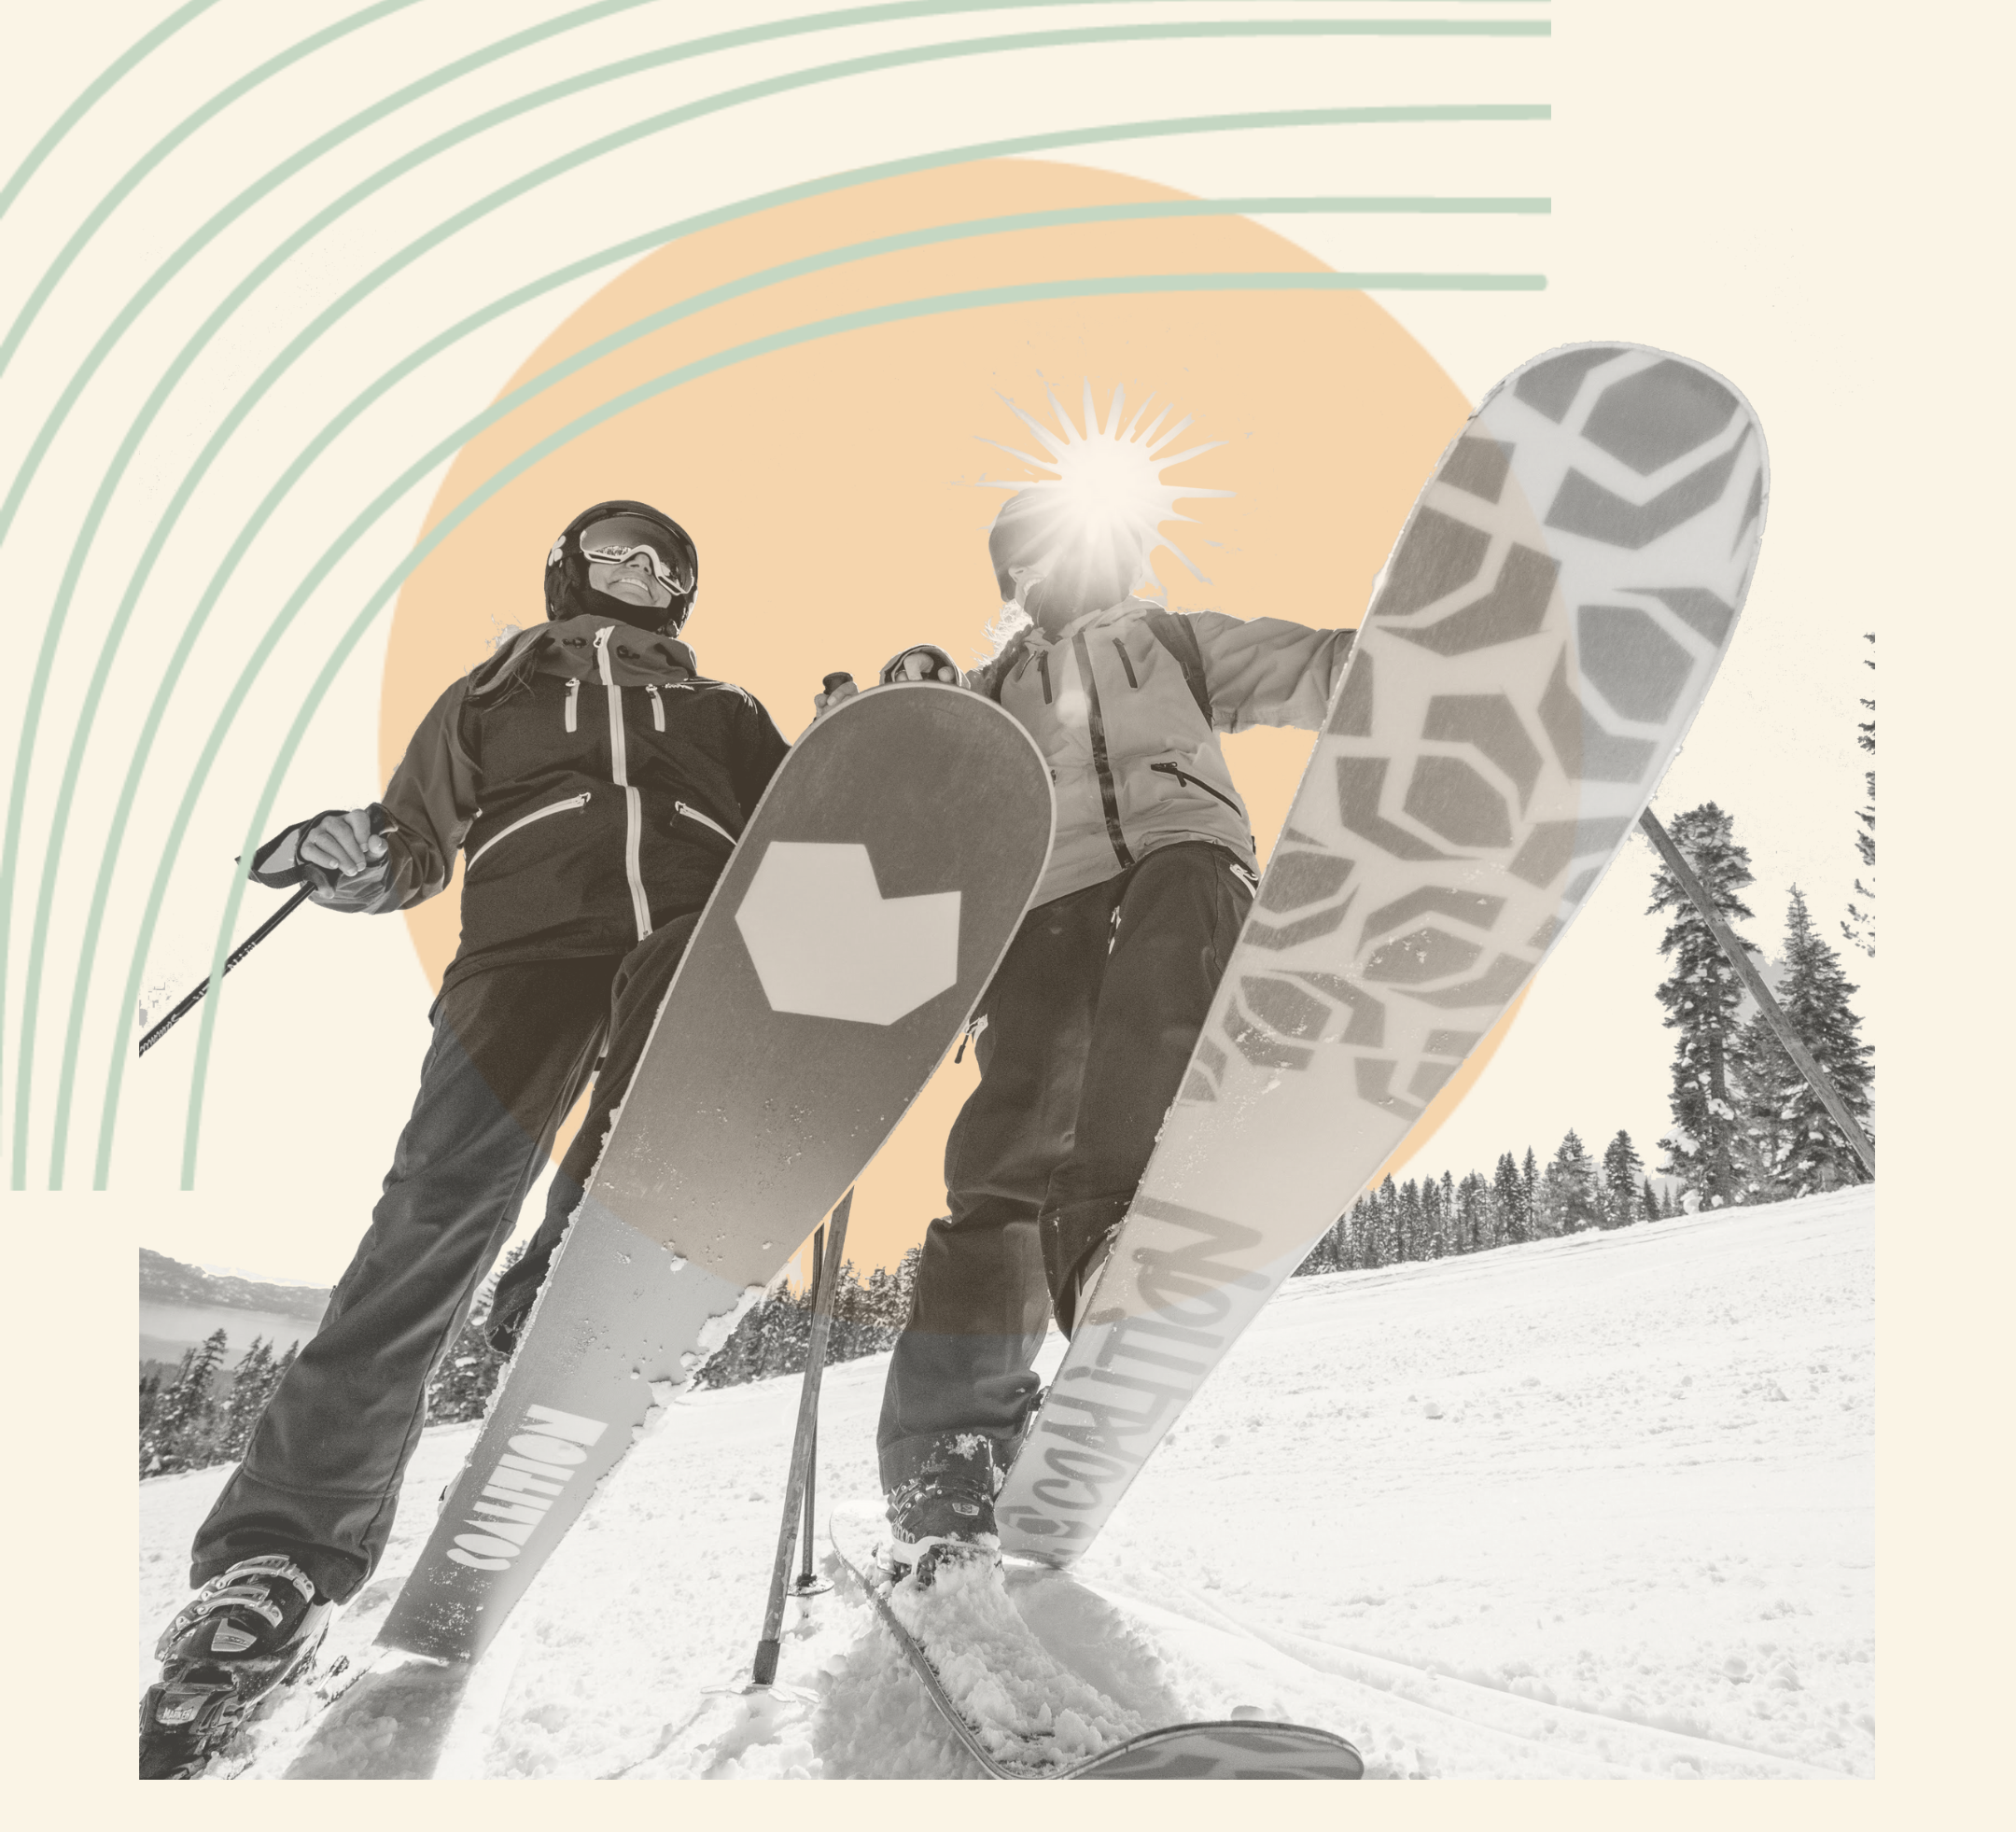 Ski & Snowboard Ratings Explained